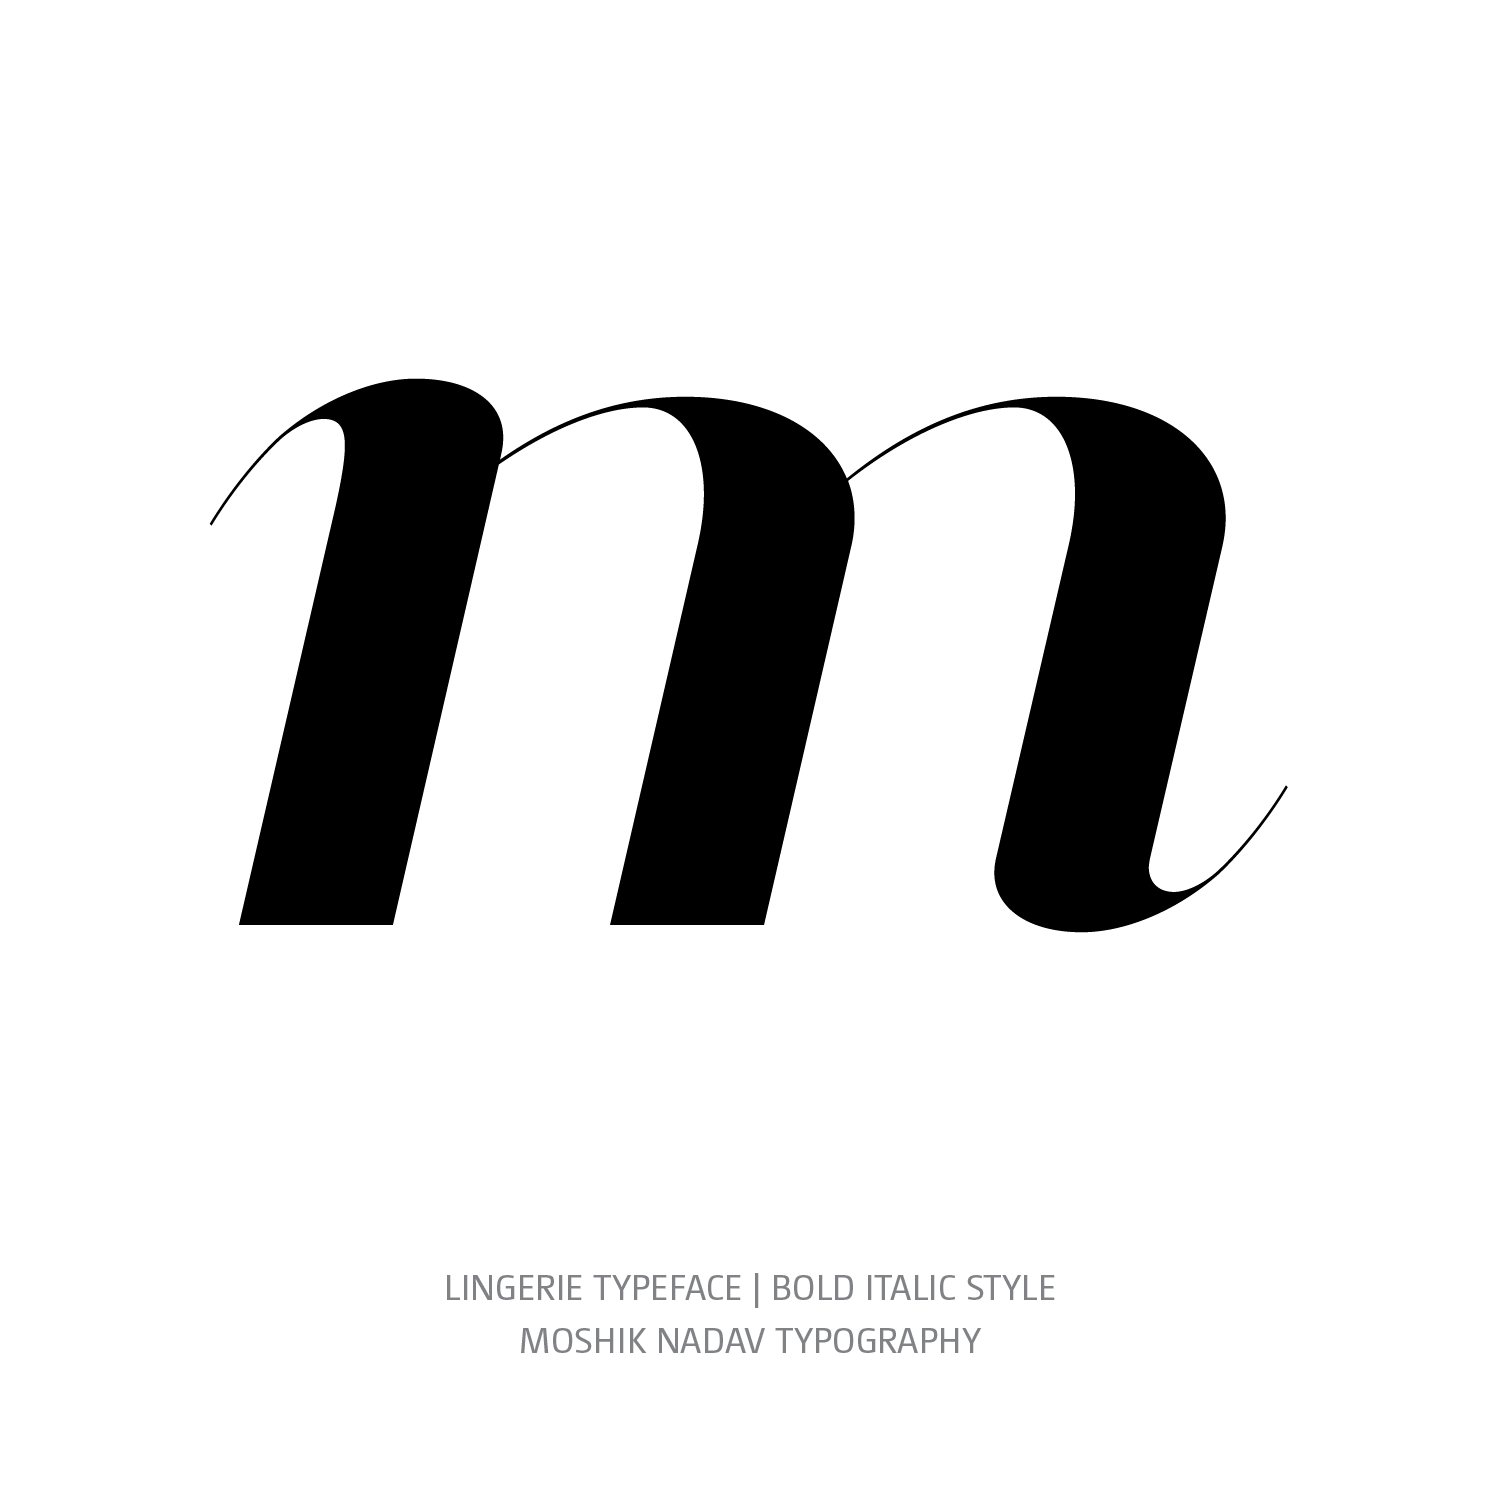 Lingerie Typeface Bold Italic m